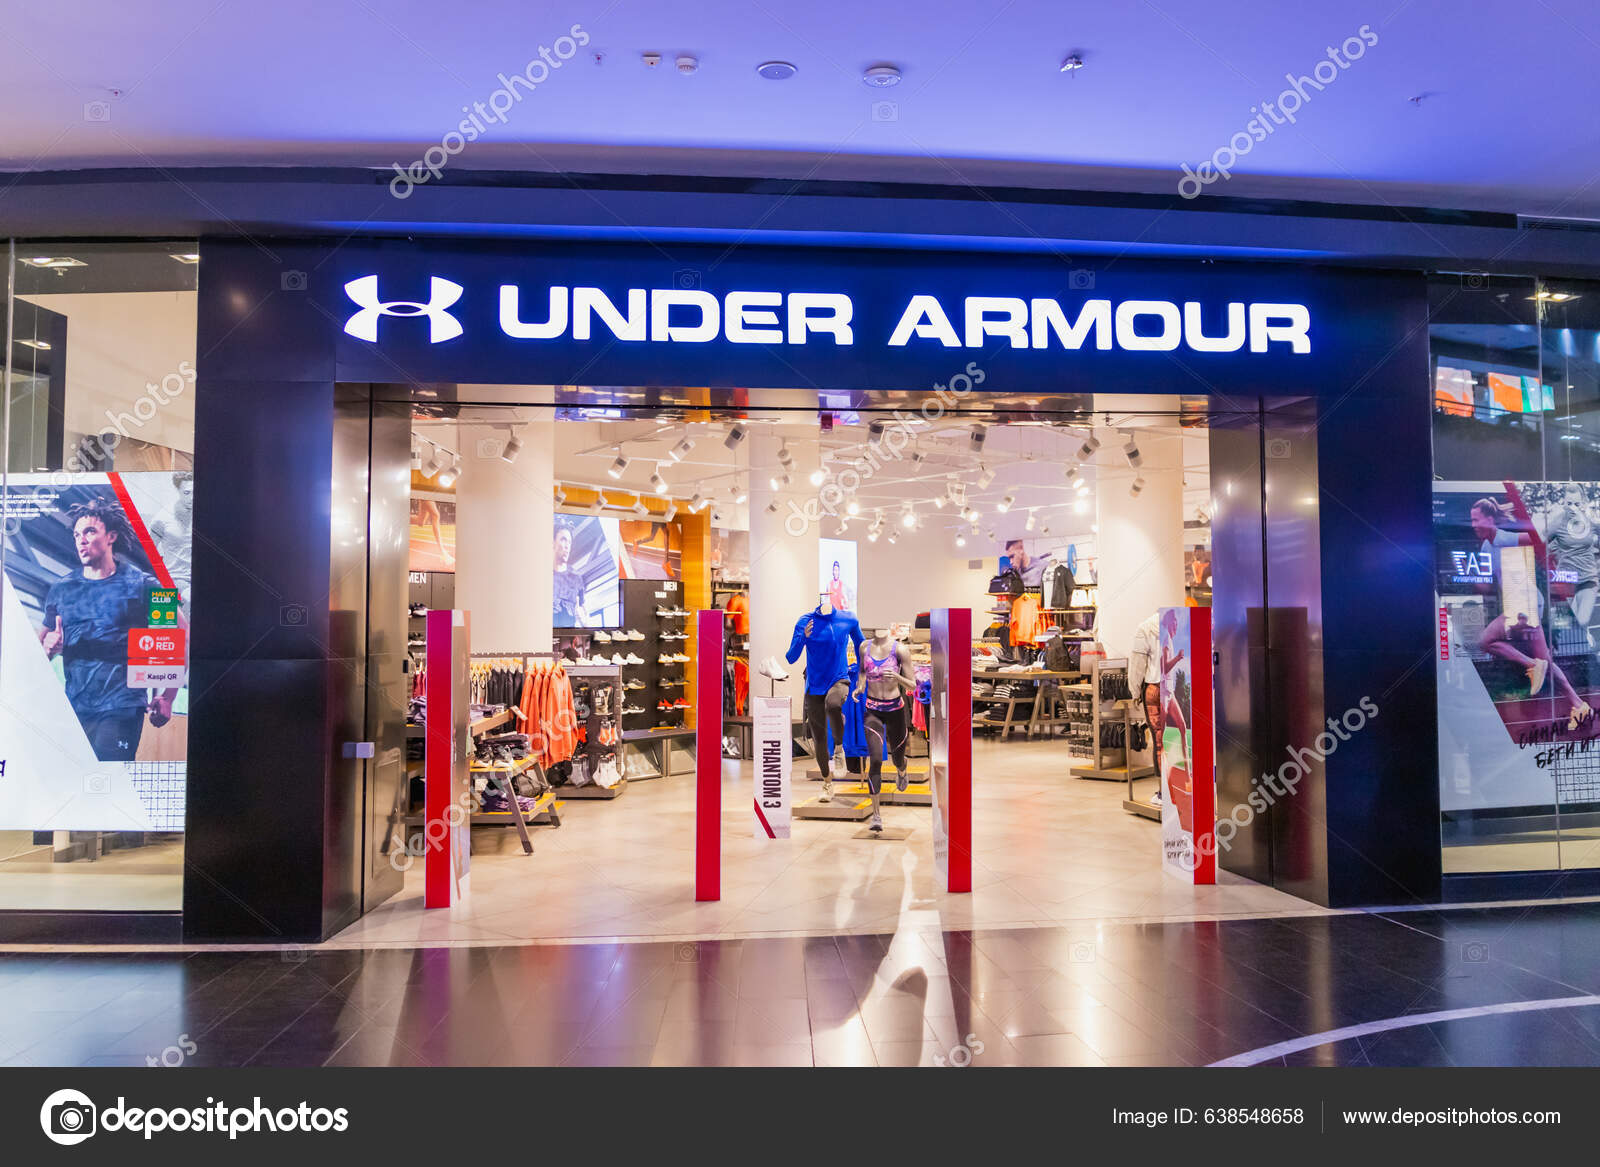 Under armour Stock Photos, Royalty Free Under armour Images | Depositphotos